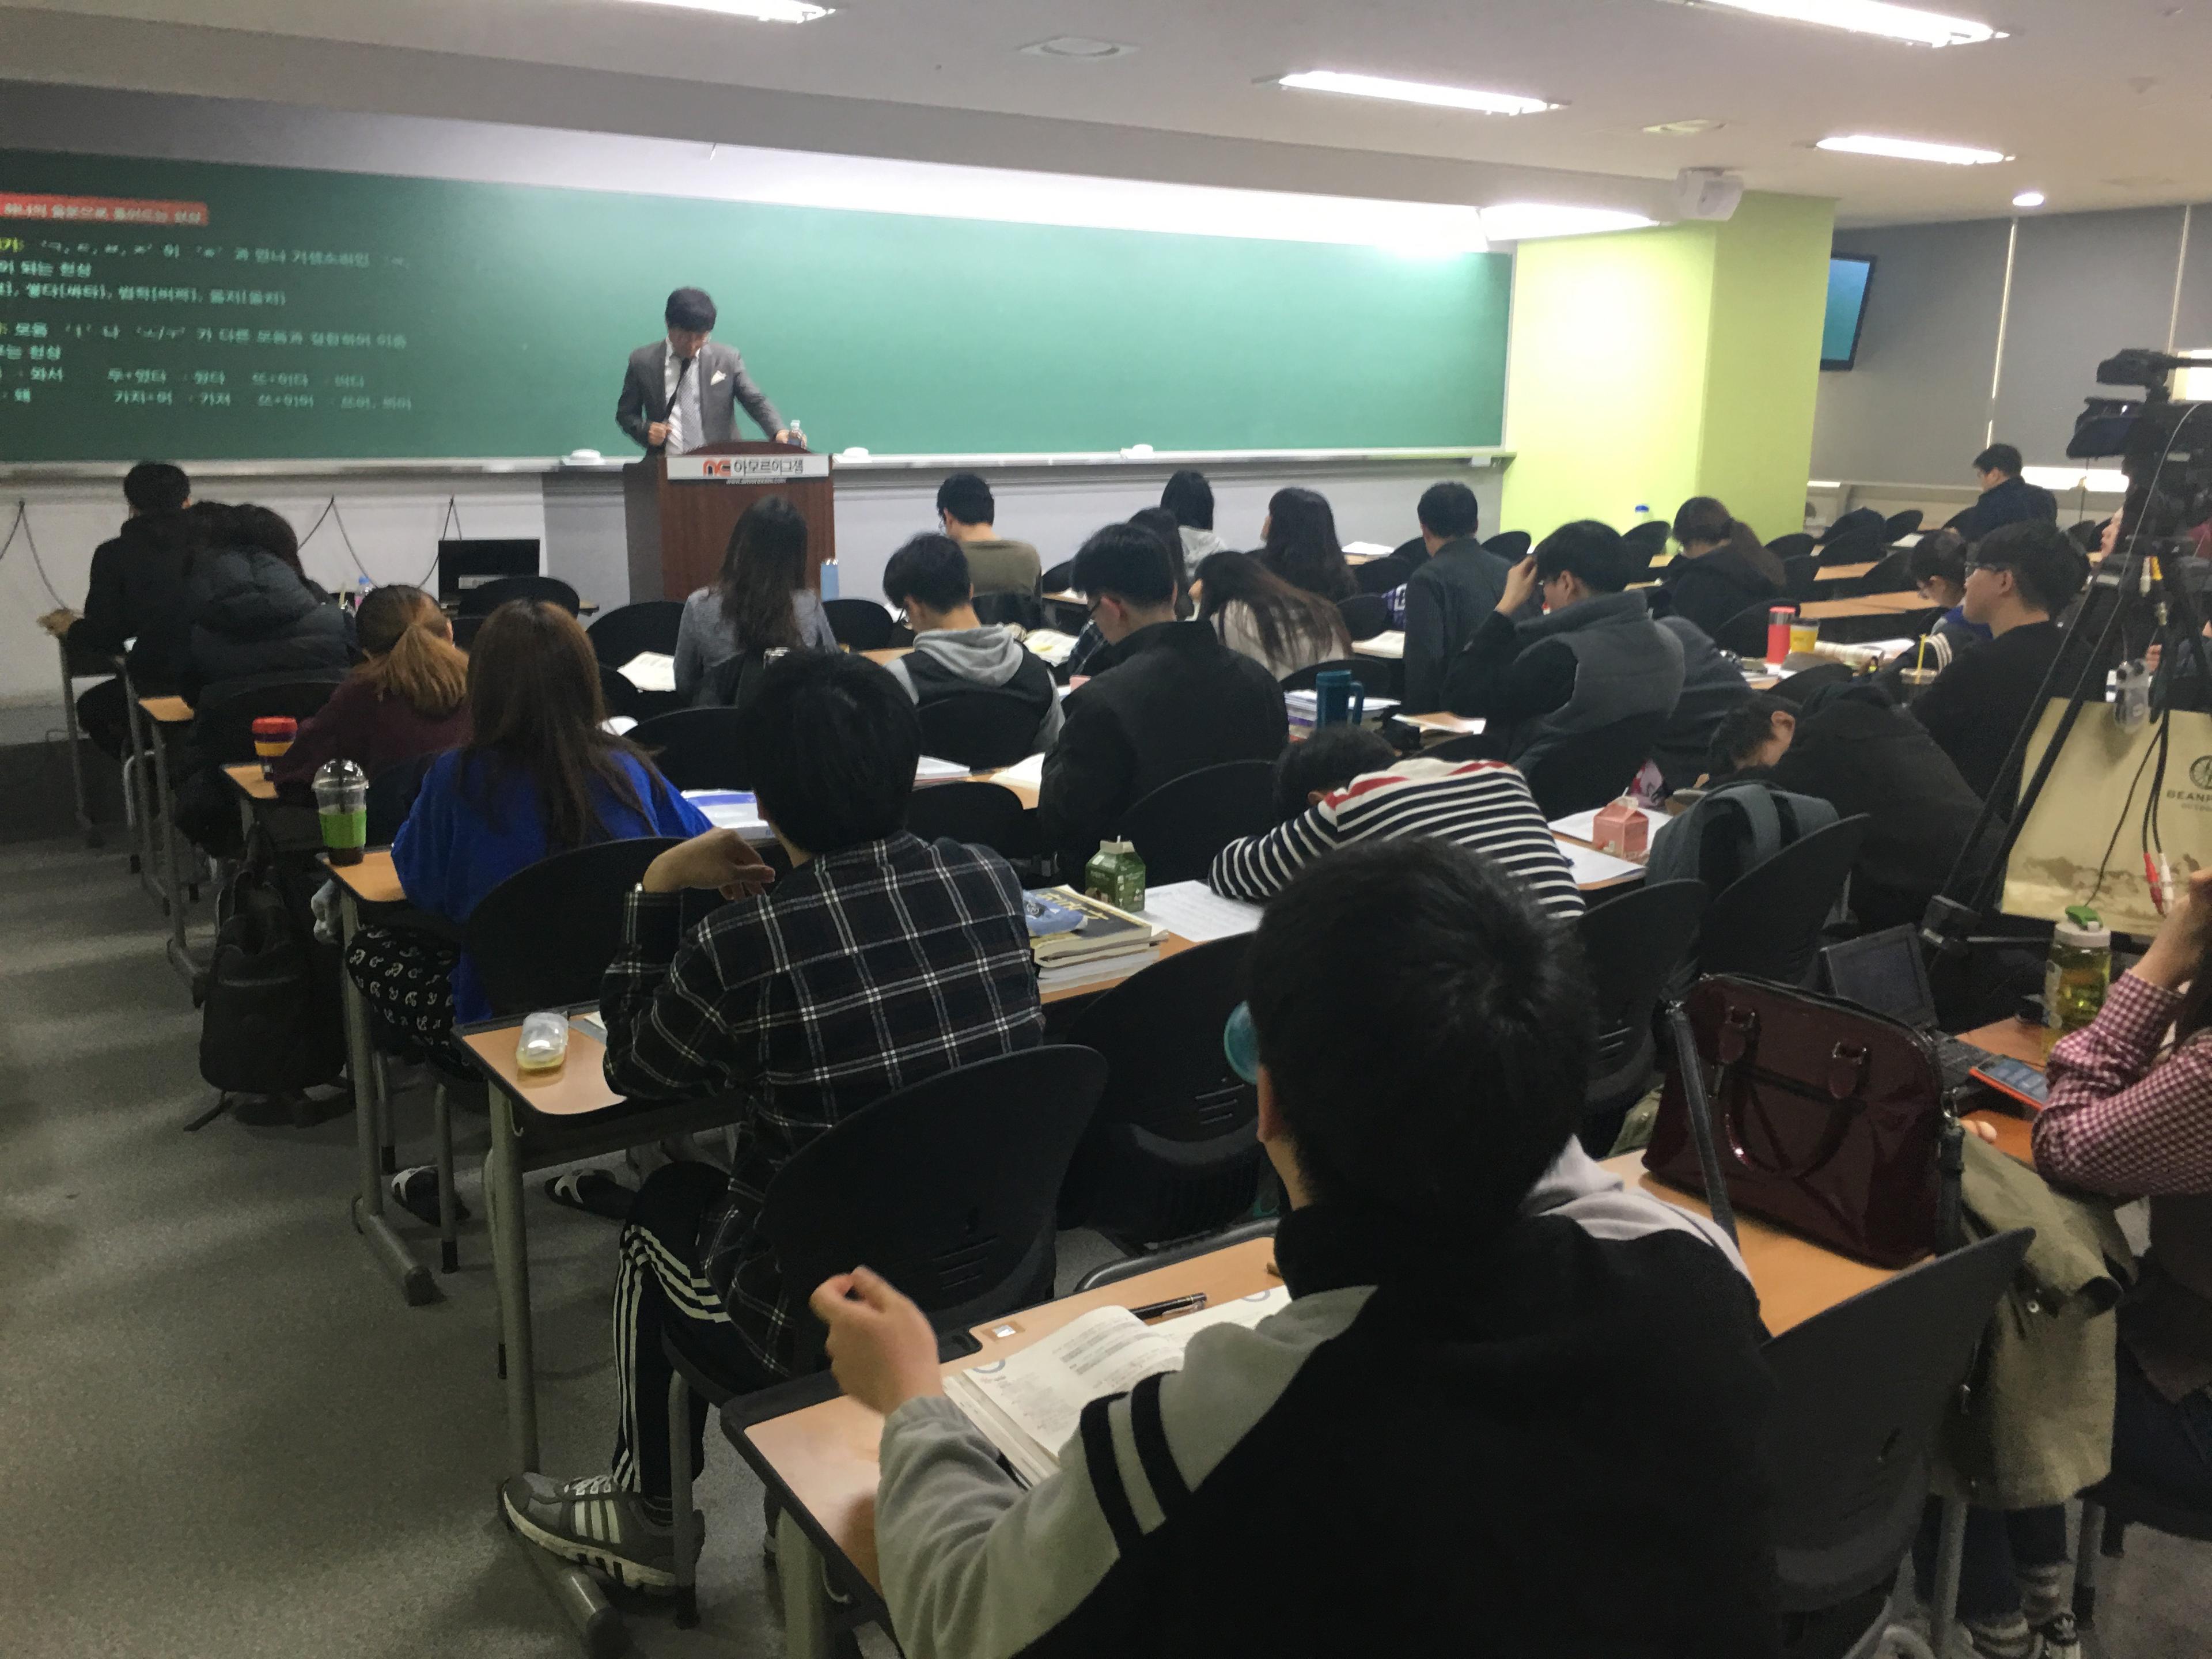 Kelas persiapan untuk ujian pegawai negeri di Seoul. (Foto: Jason Strother) 